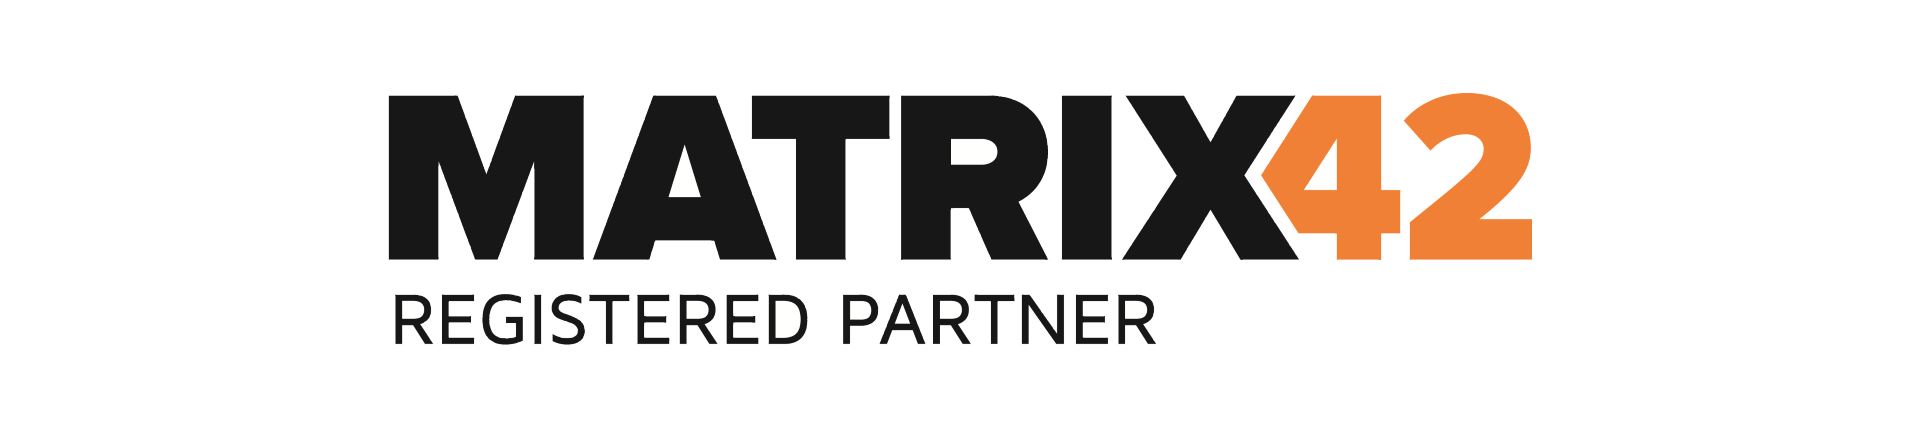 Matrix42 Registered Partner